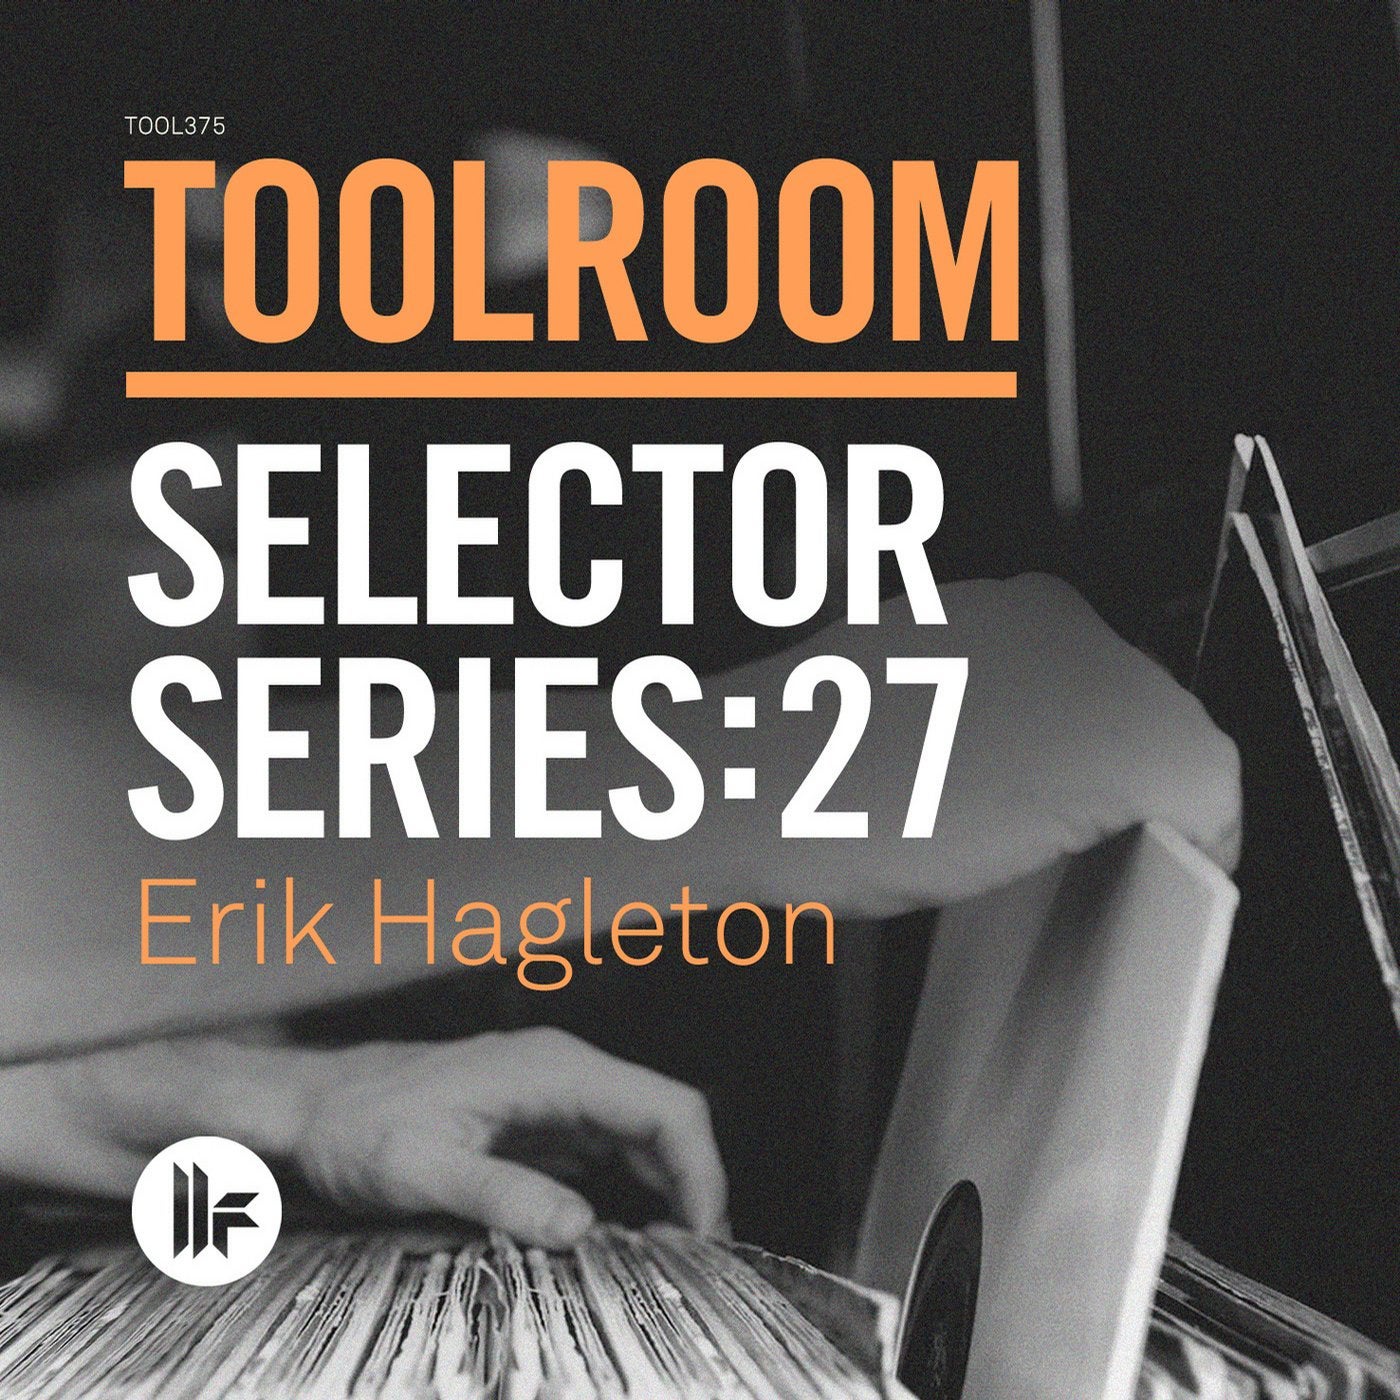 Toolroom Selector Series: 27 Erik Hagleton